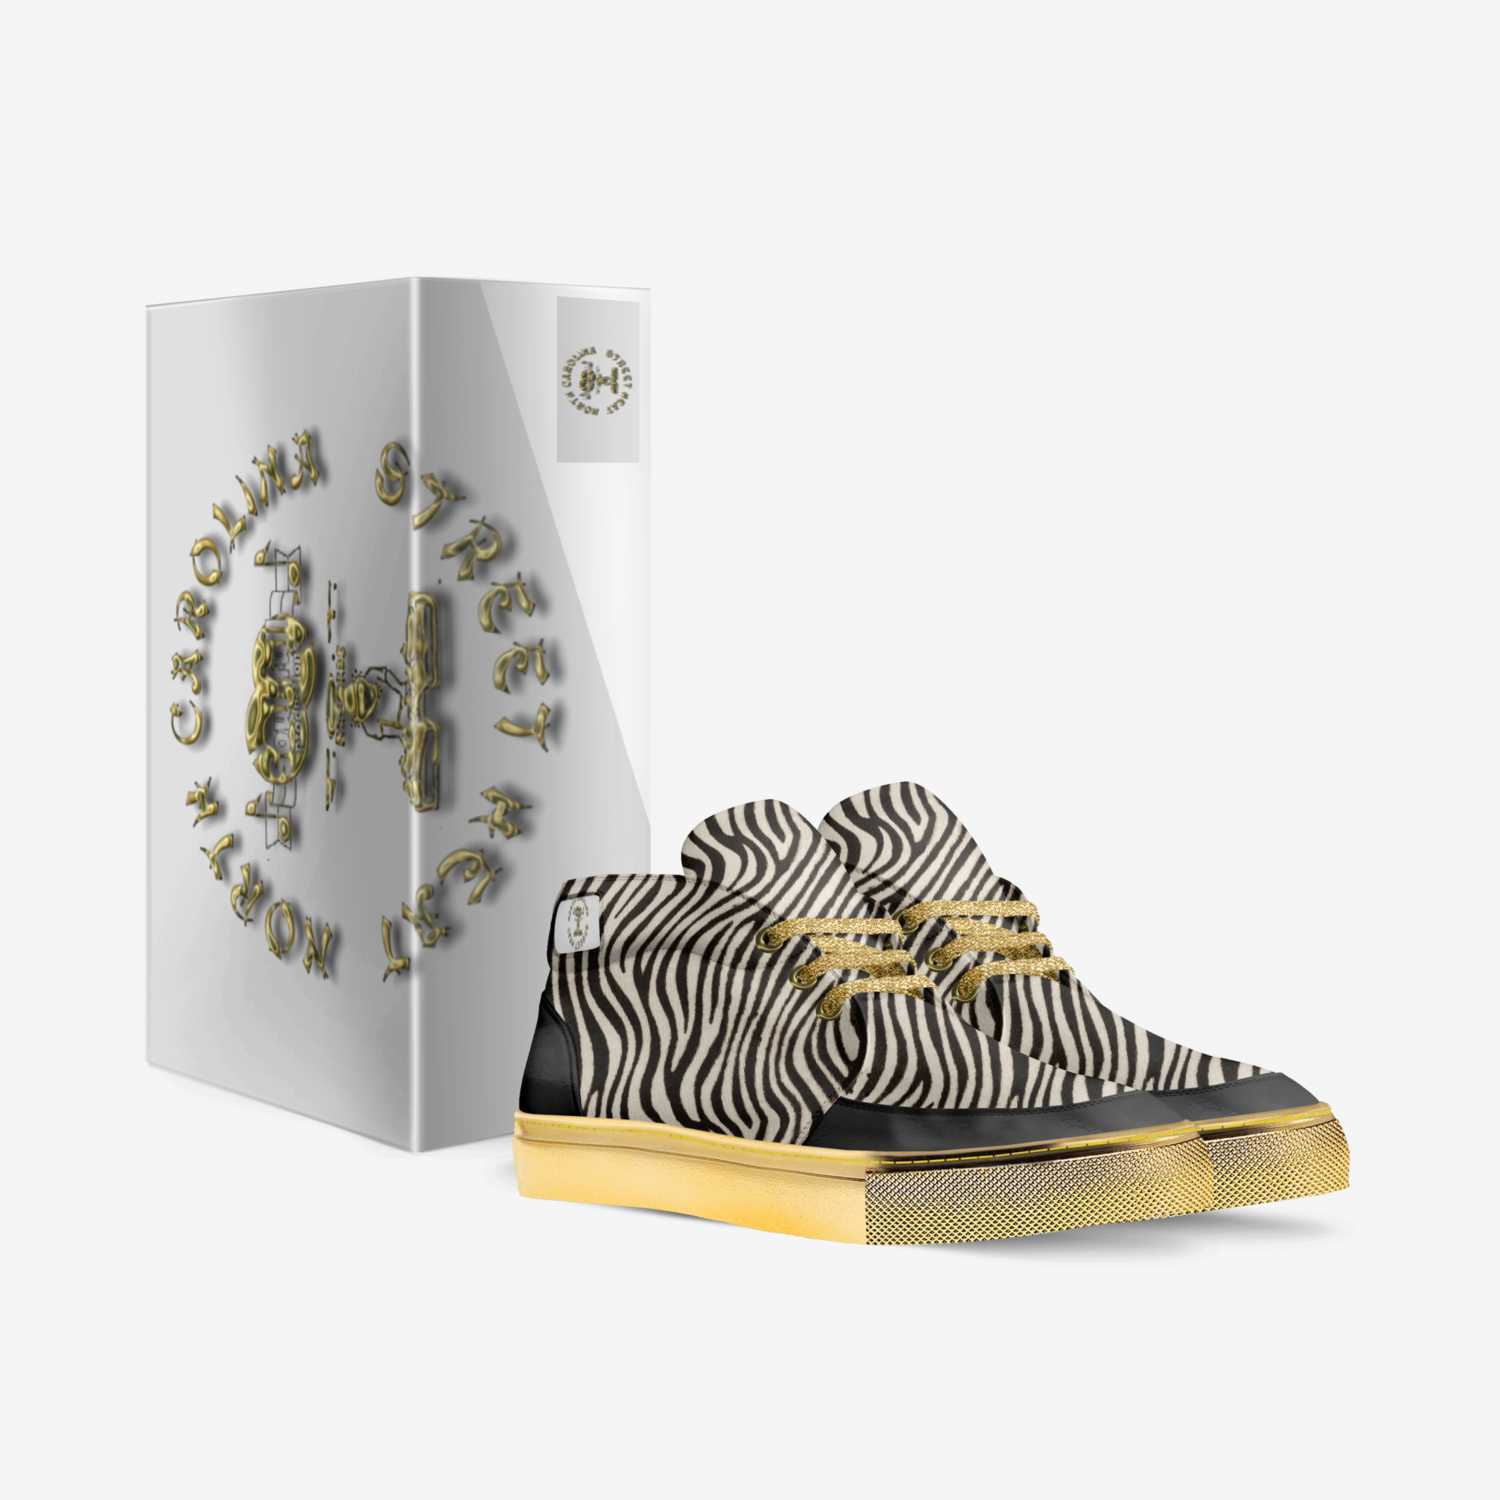 TODO MI GENTE custom made in Italy shoes by Grande Gato | Box view